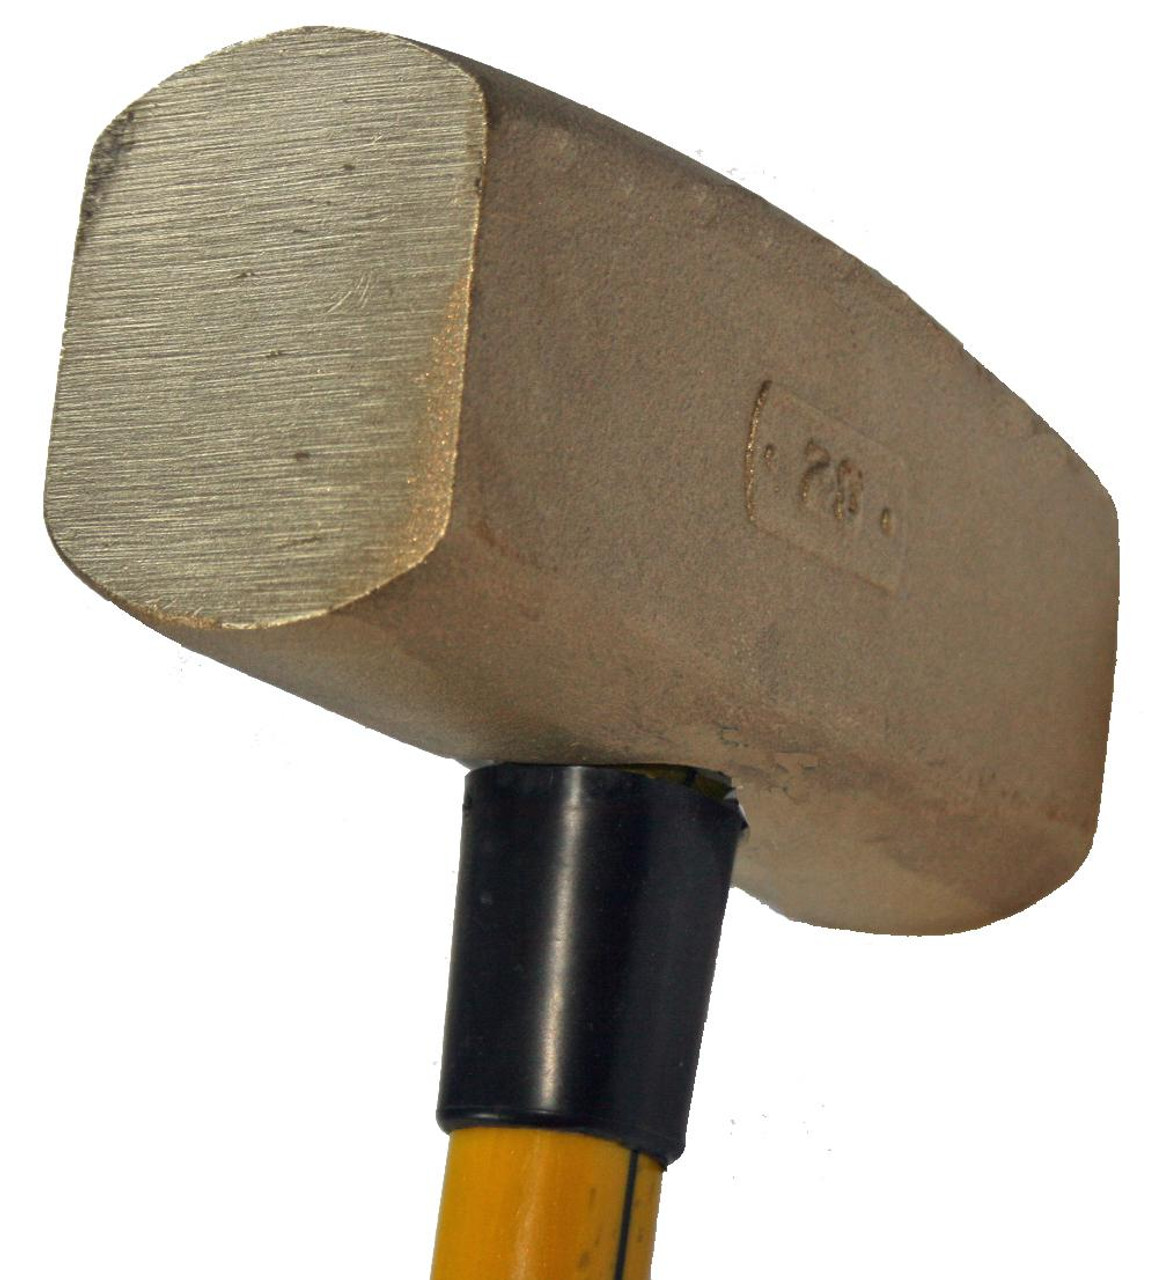 24 lb Brass sledge hammer, 36" fiberglass handle